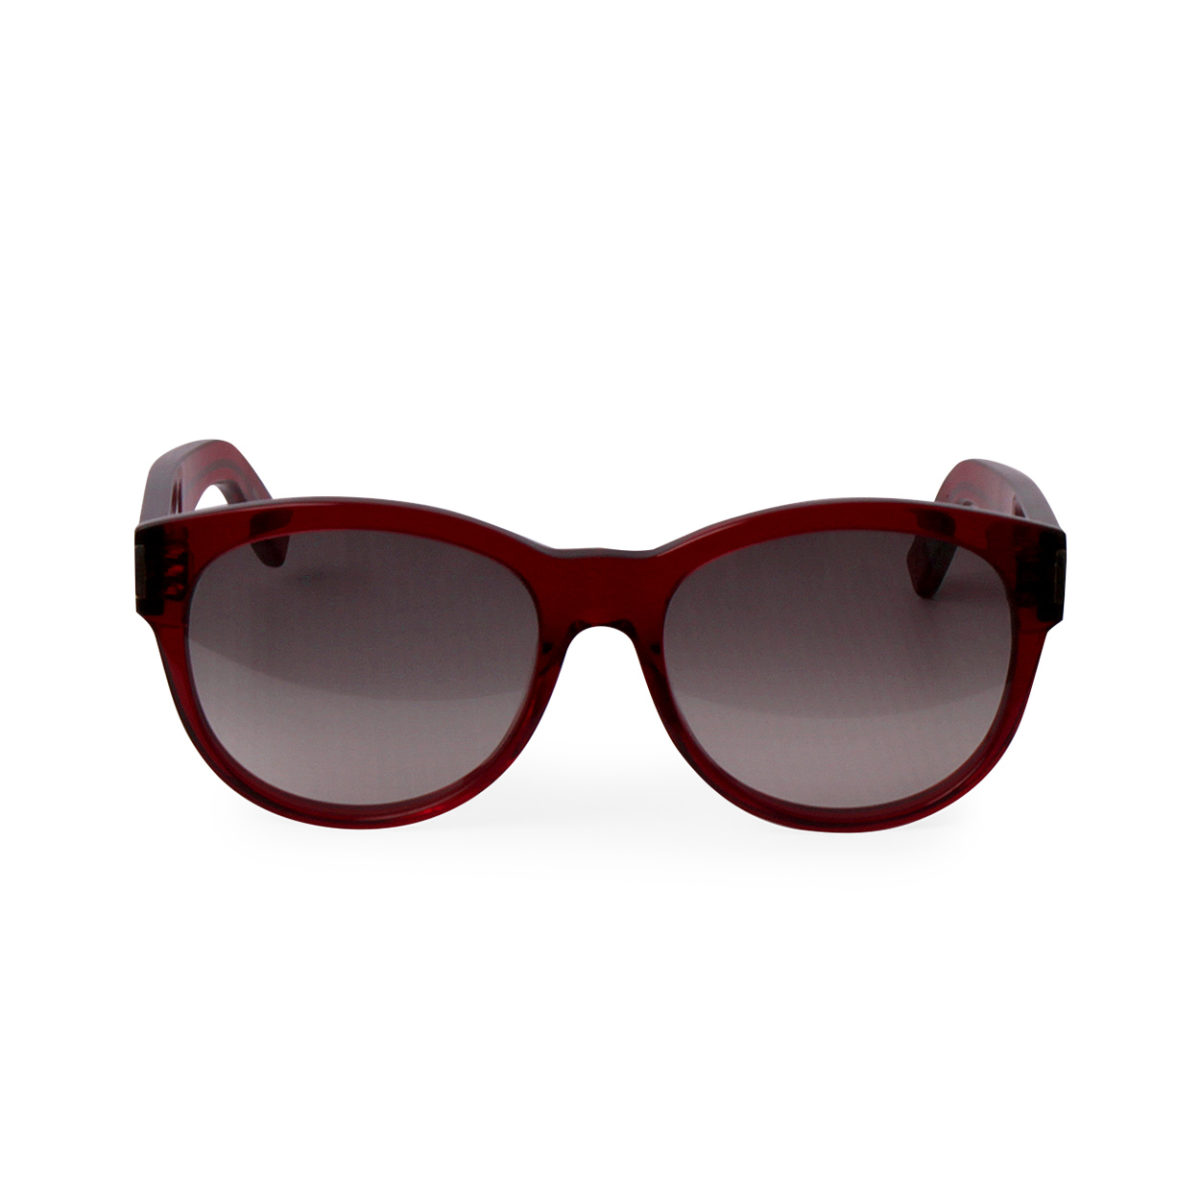 SAINT LAURENT Sunglasses SL67 007 Red | Luxity